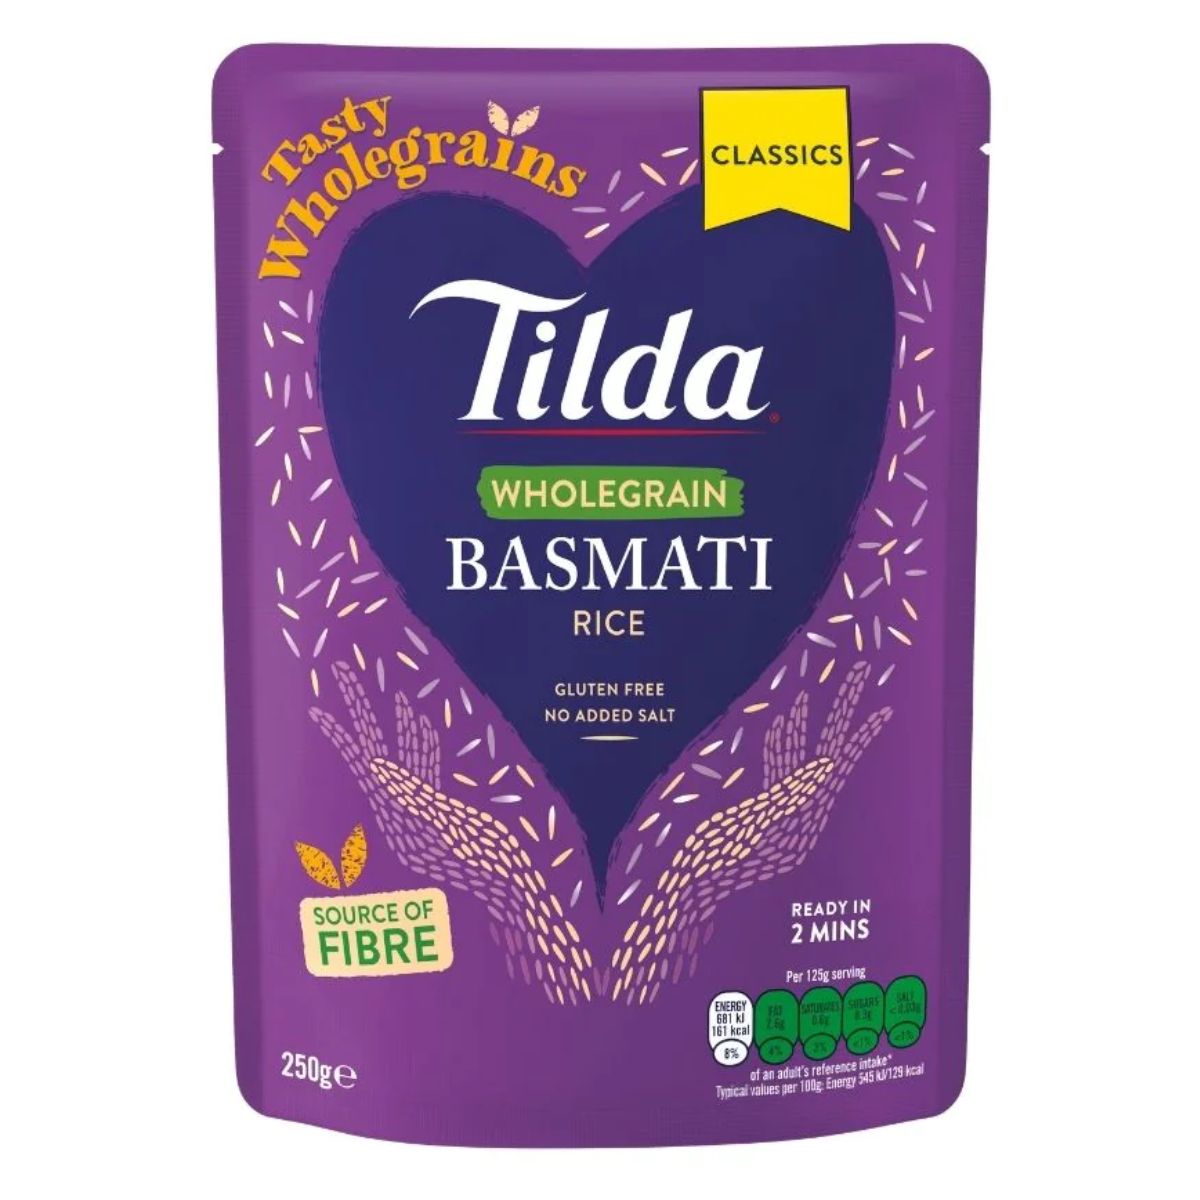 Tilda - Classics Wholegrain Basmati Rice - 250g.